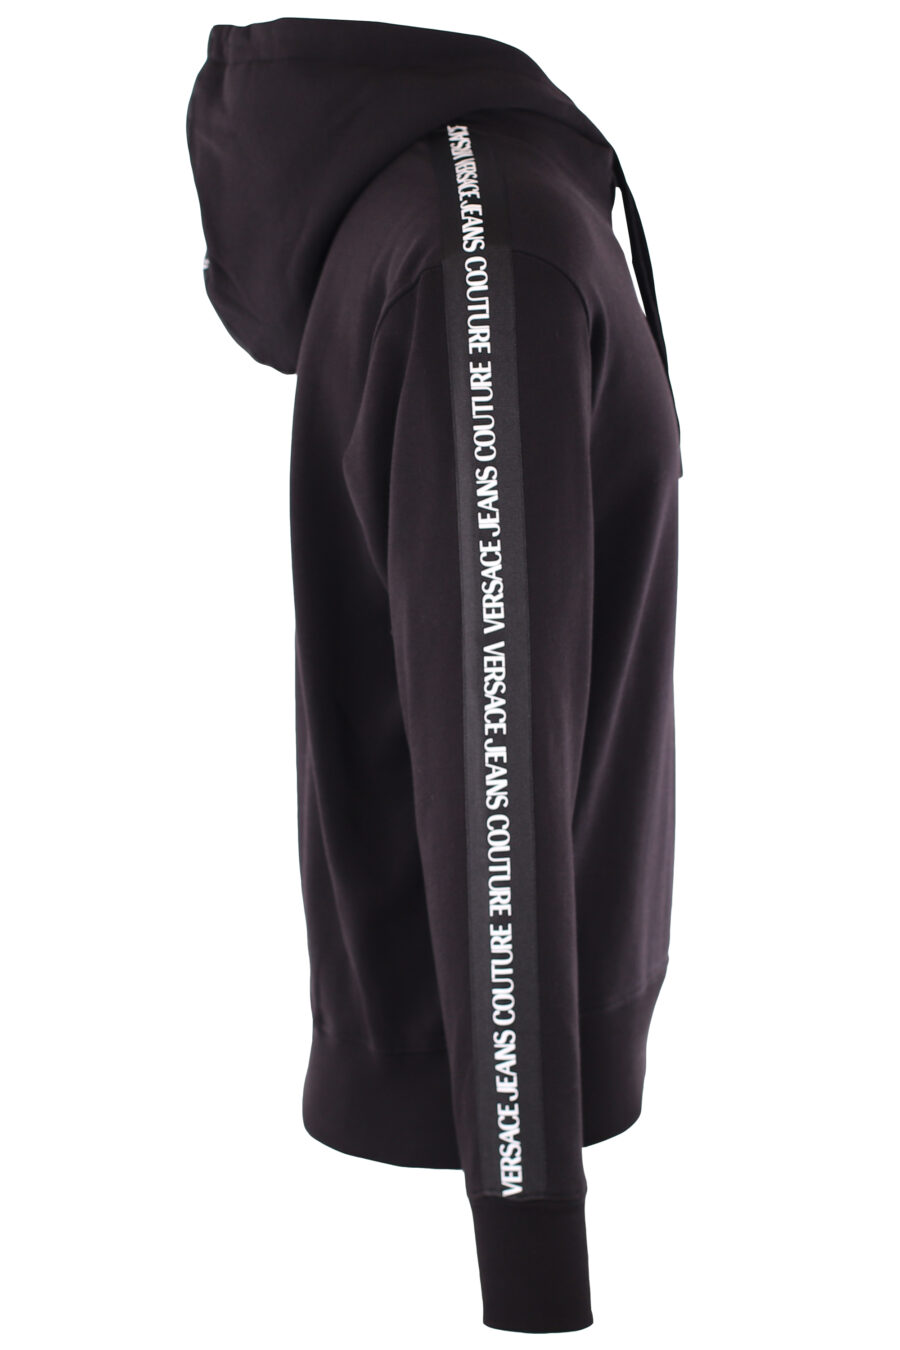 Black hooded sweatshirt with ribbon logo on sleeves - IMG 6452